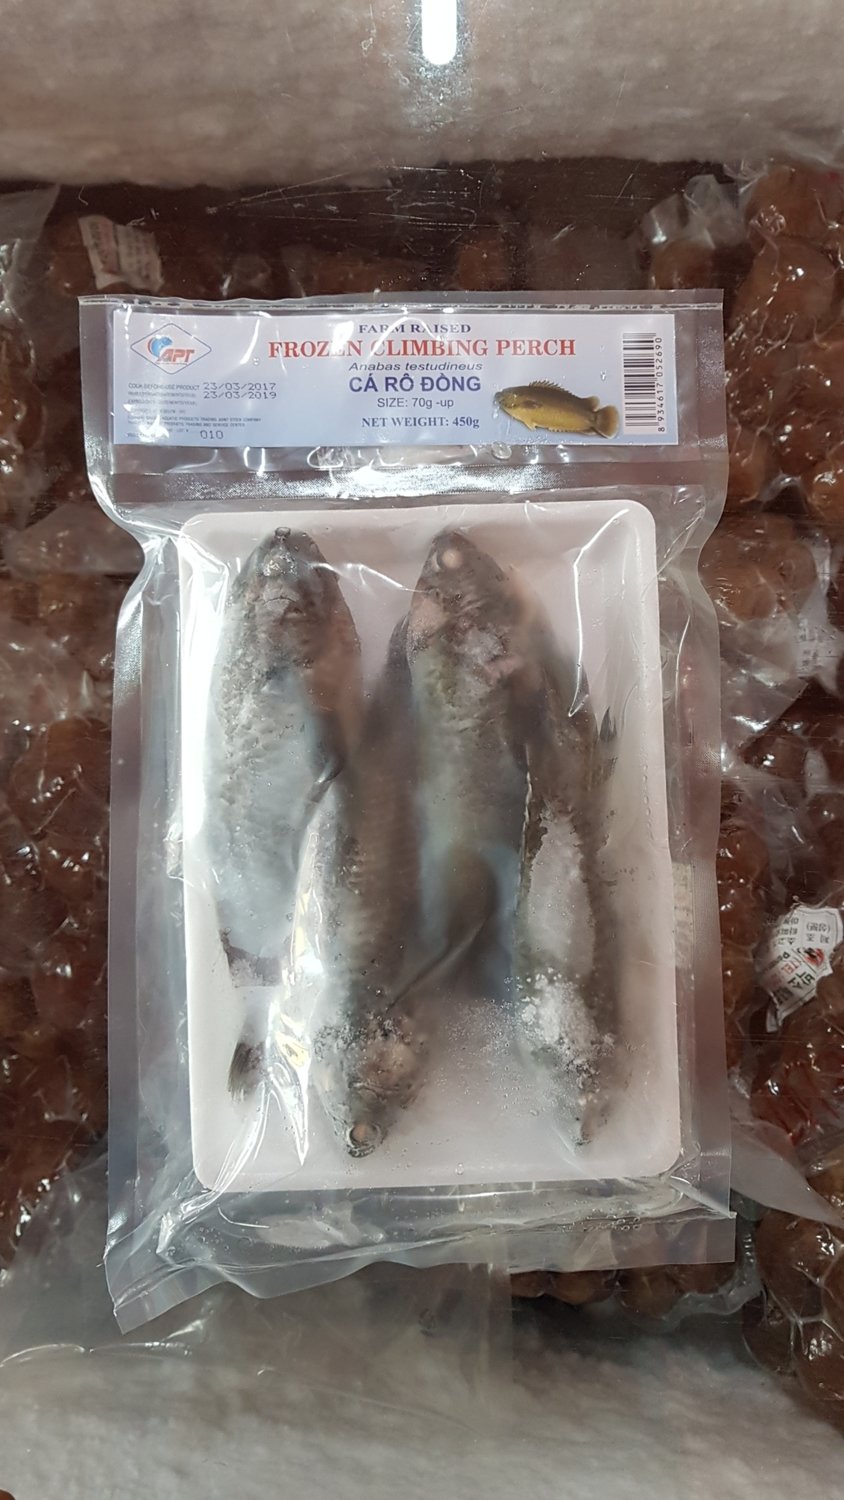 Ikan Betok/Betik (frozen climbing perch)